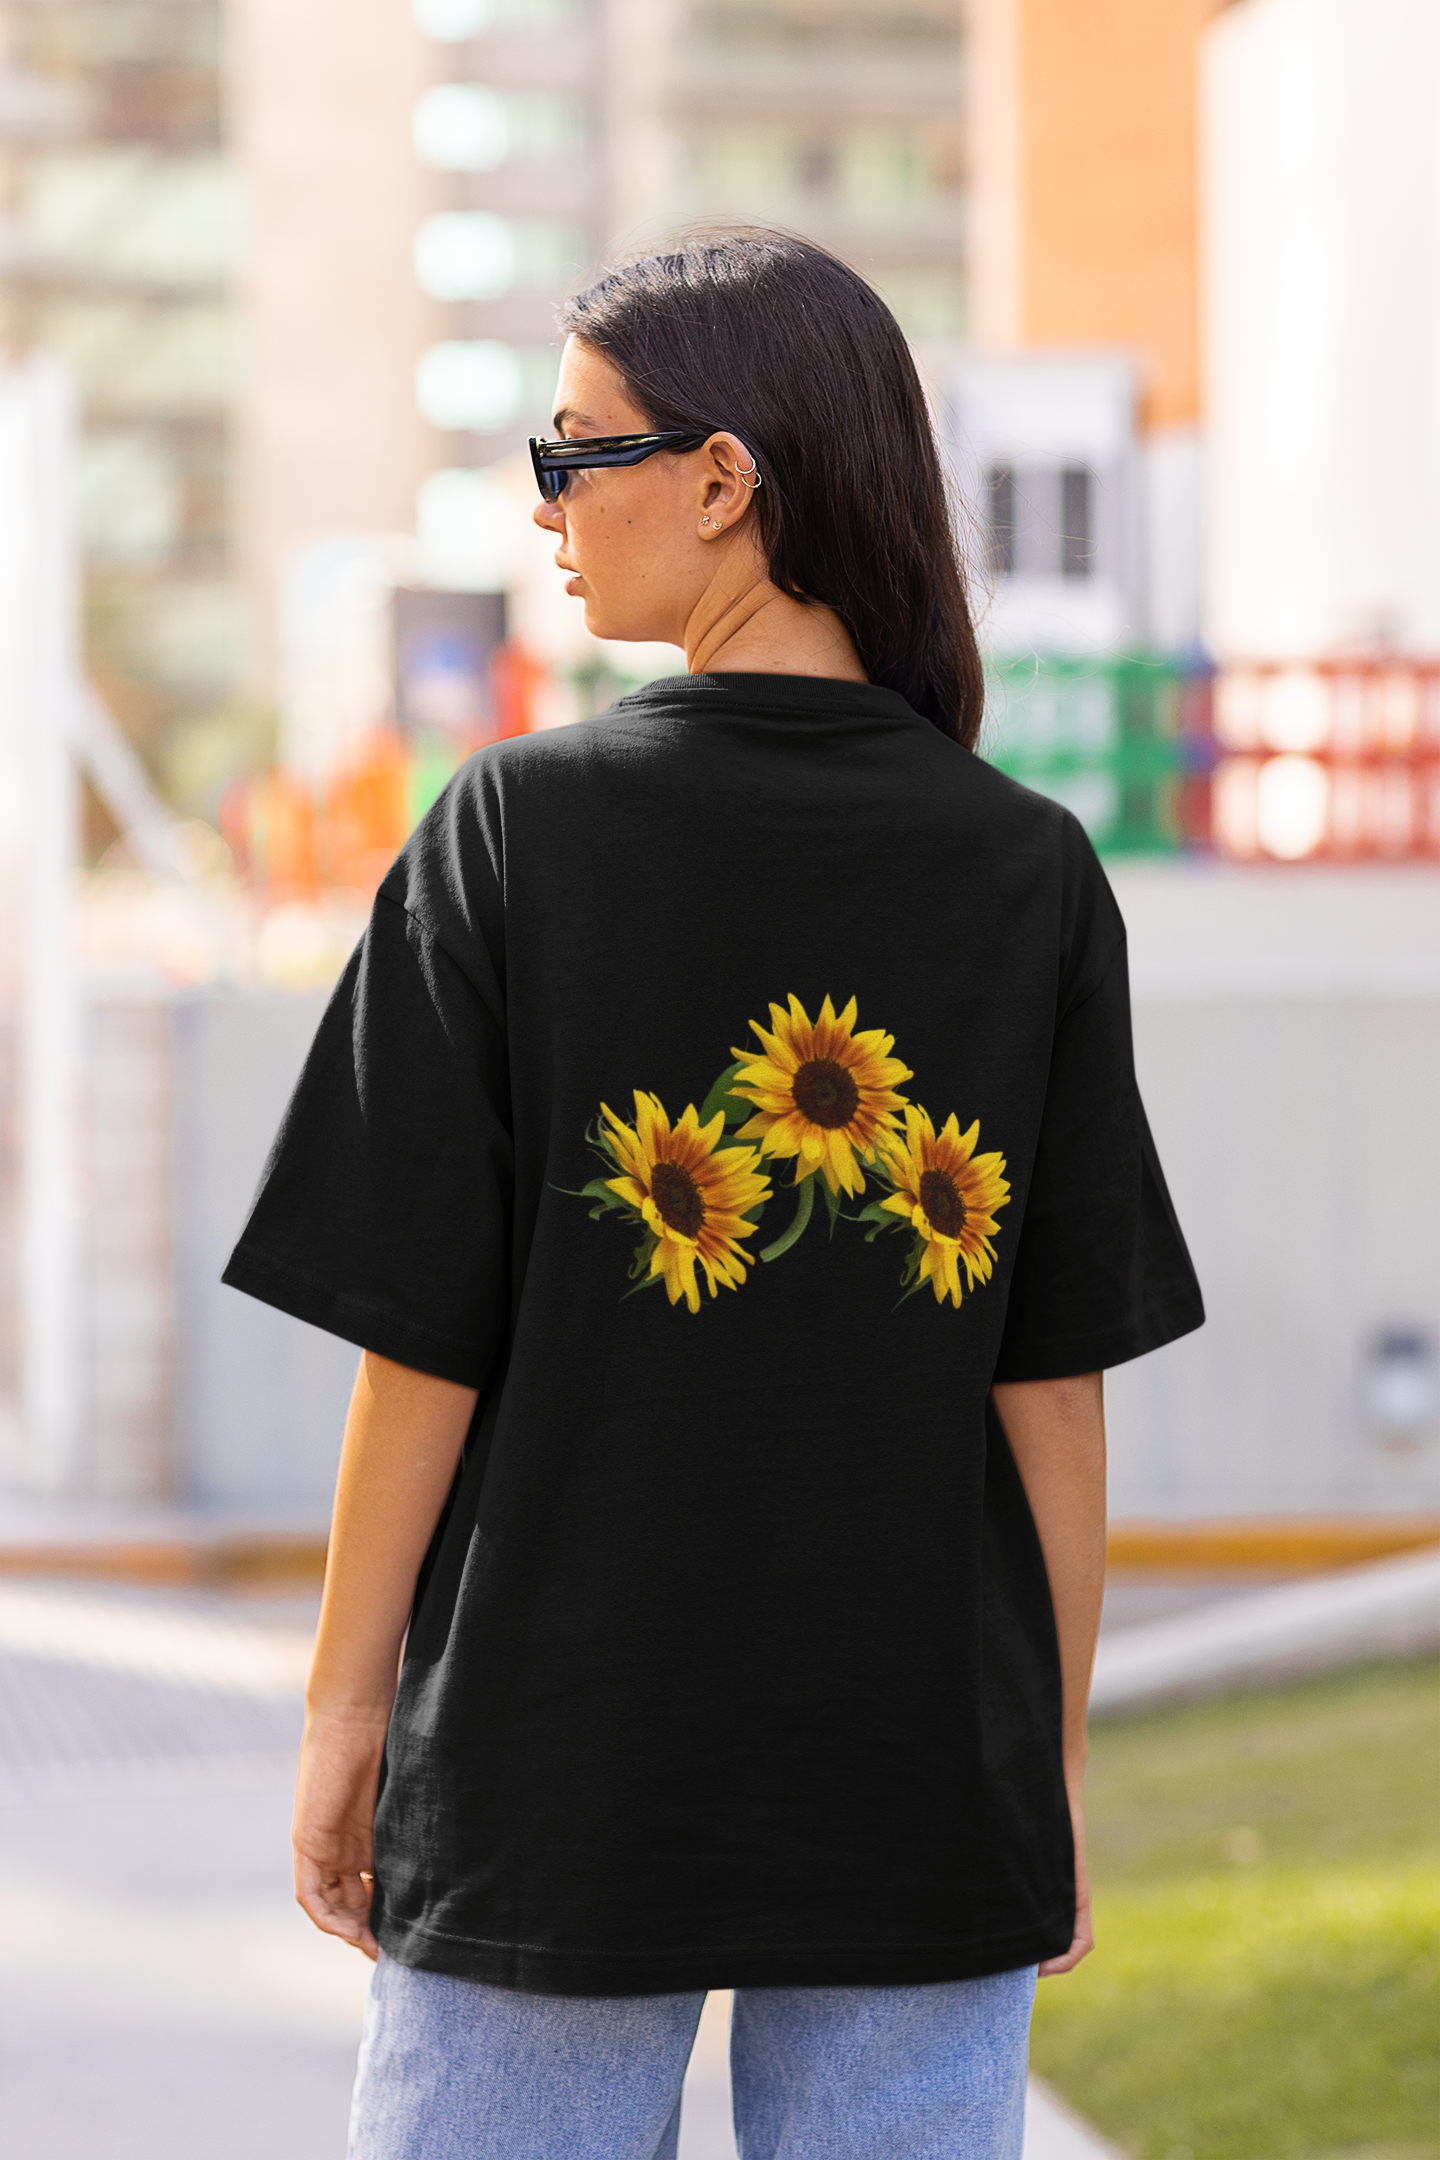 You are the sunflower| Premium Oversized Half Sleeve Unisex T-Shirt